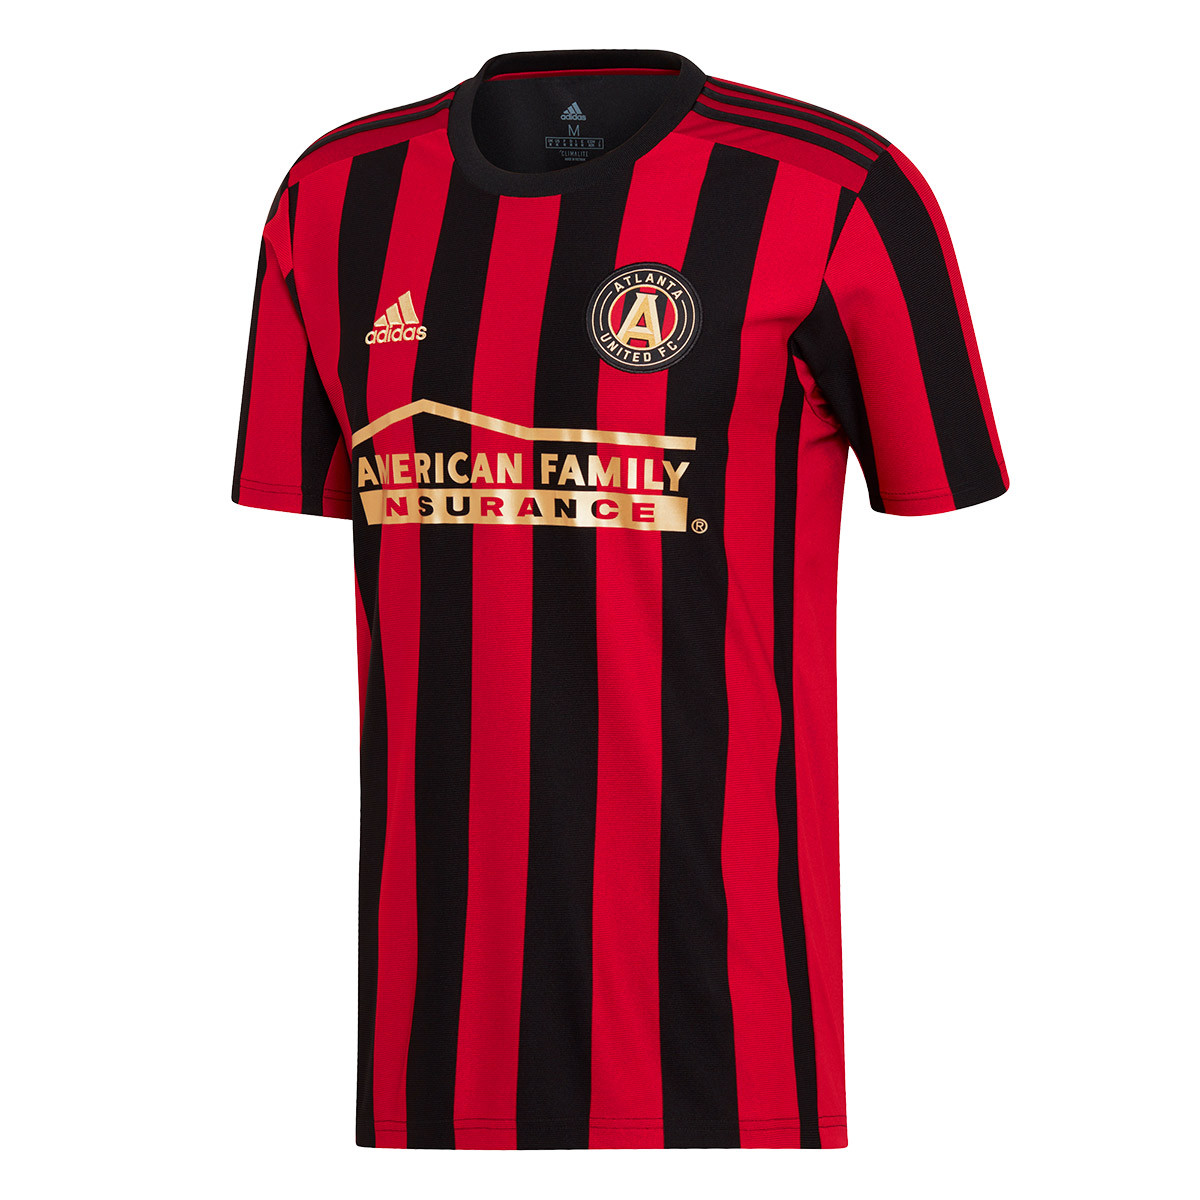 atlanta united 2019 jersey